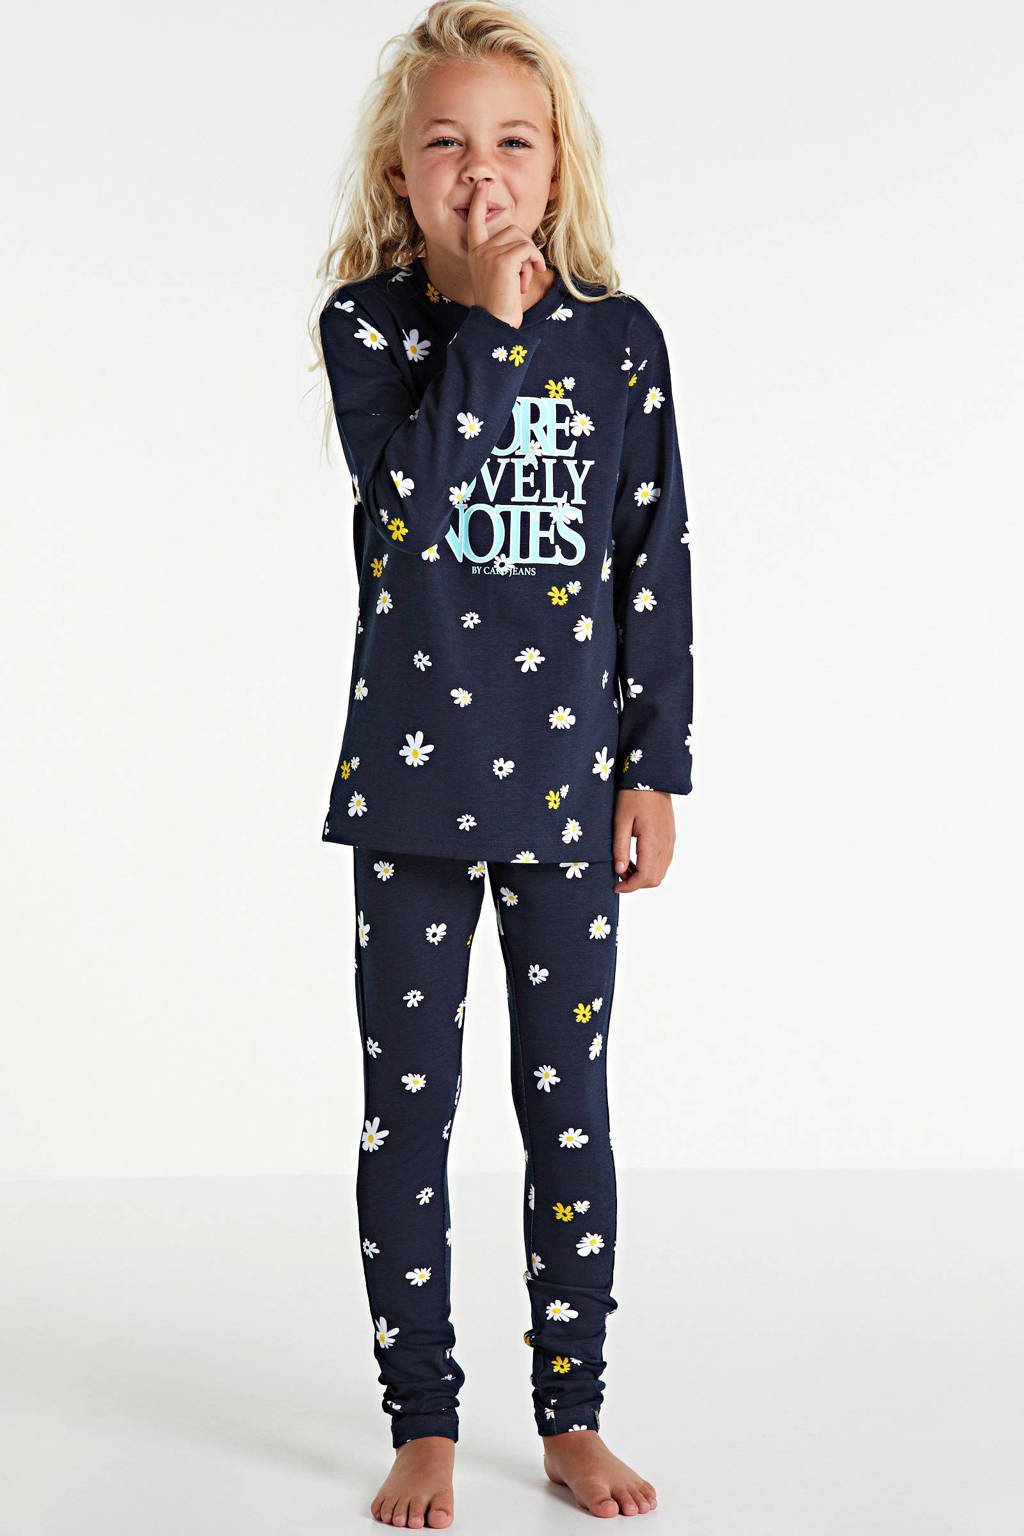 droom diefstal Voorgevoel Cars pyjama Lotus met all over print donkerblauw/lichtblauw | wehkamp